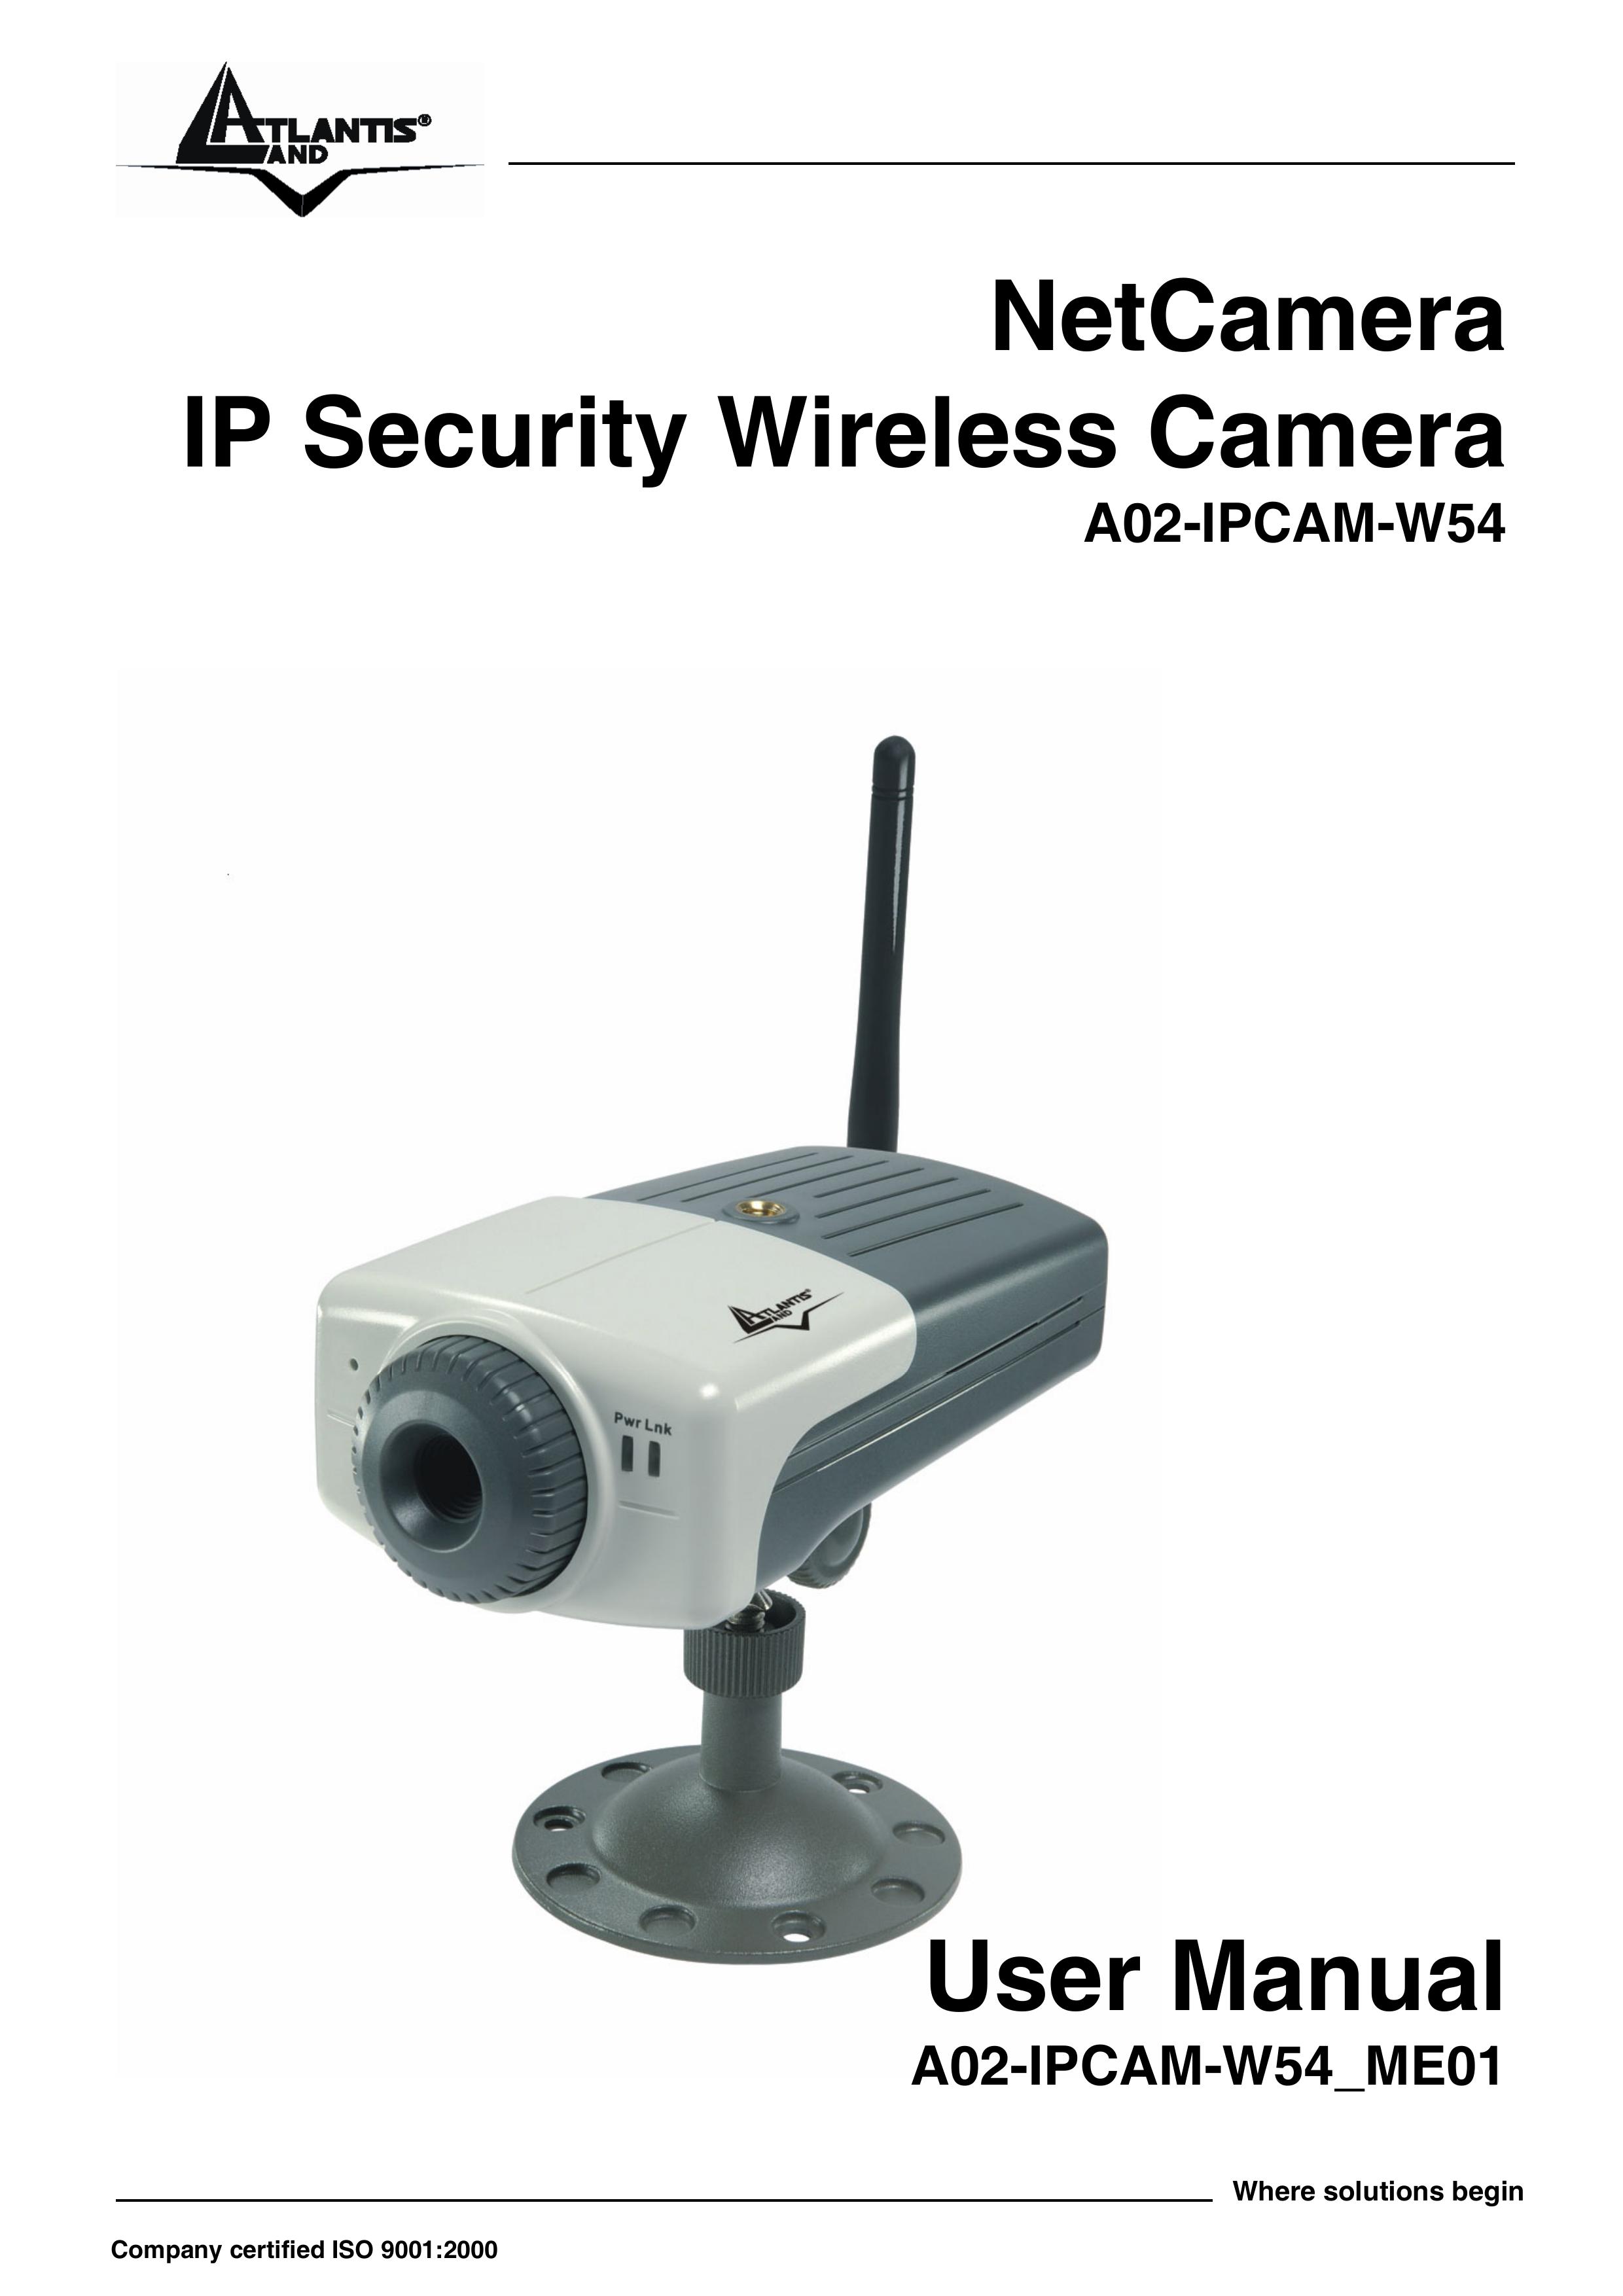 Atlantis Land A02-IPCAM-W54 Security Camera User Manual